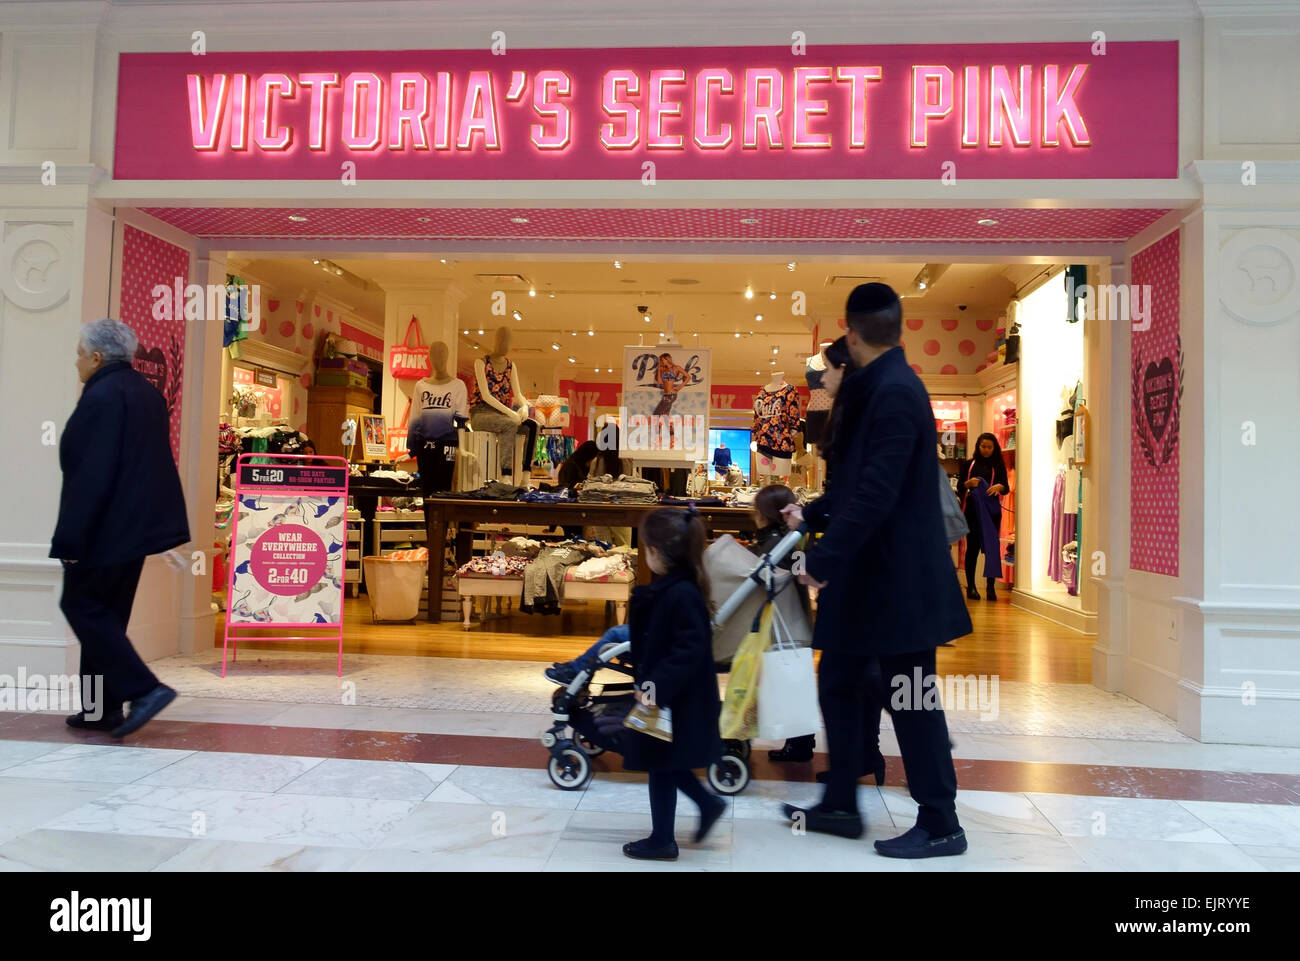 Victorias Secret Pink casual Wear und Accessoires Store, London Stockfoto